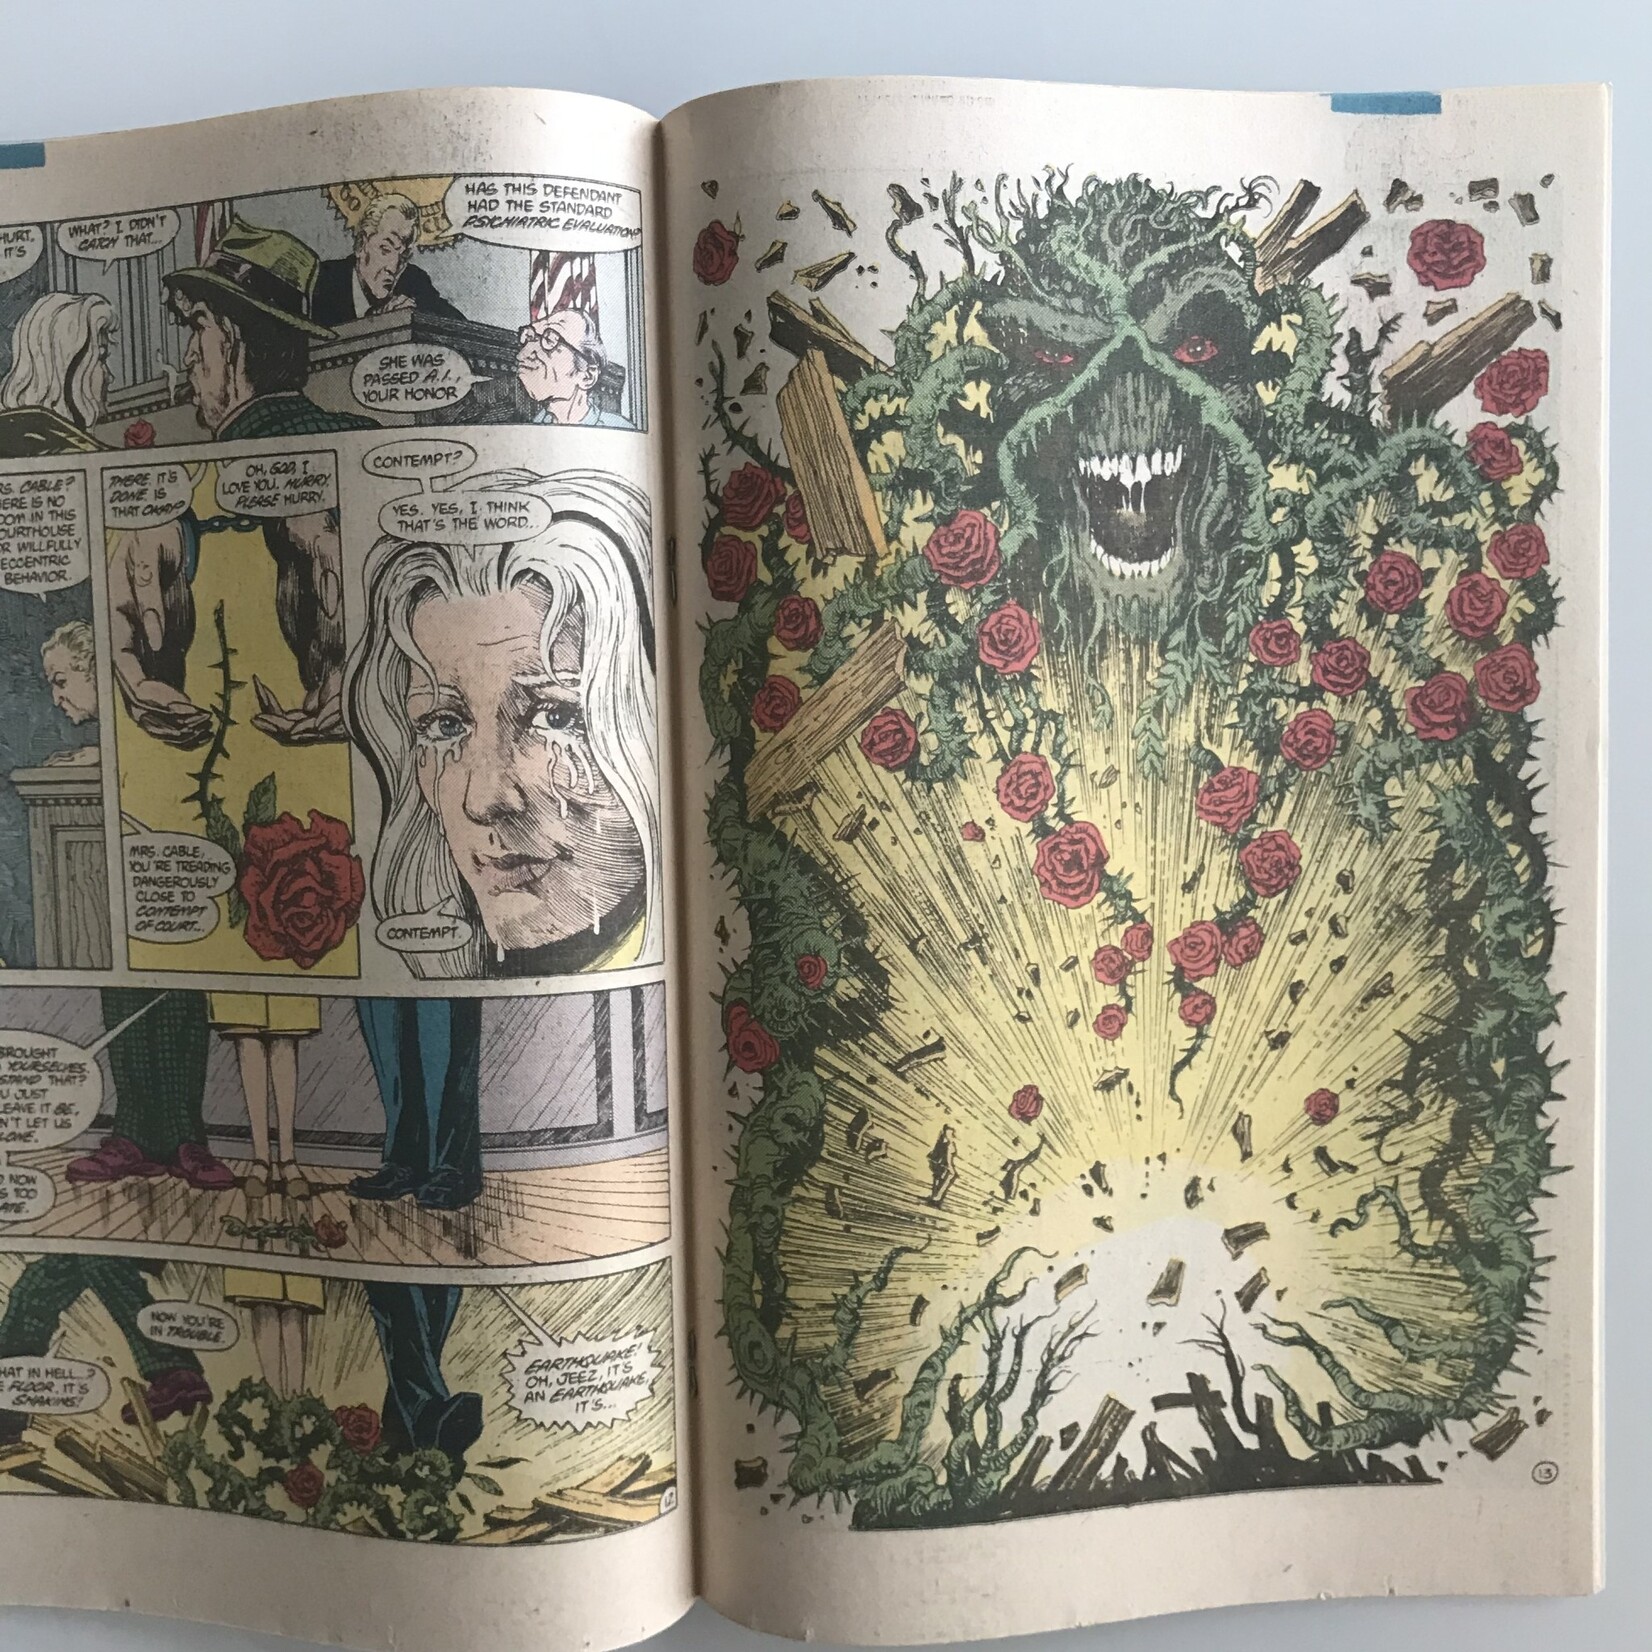 Swamp Thing - Vol. 2 #52 September 1986 - Comic Book